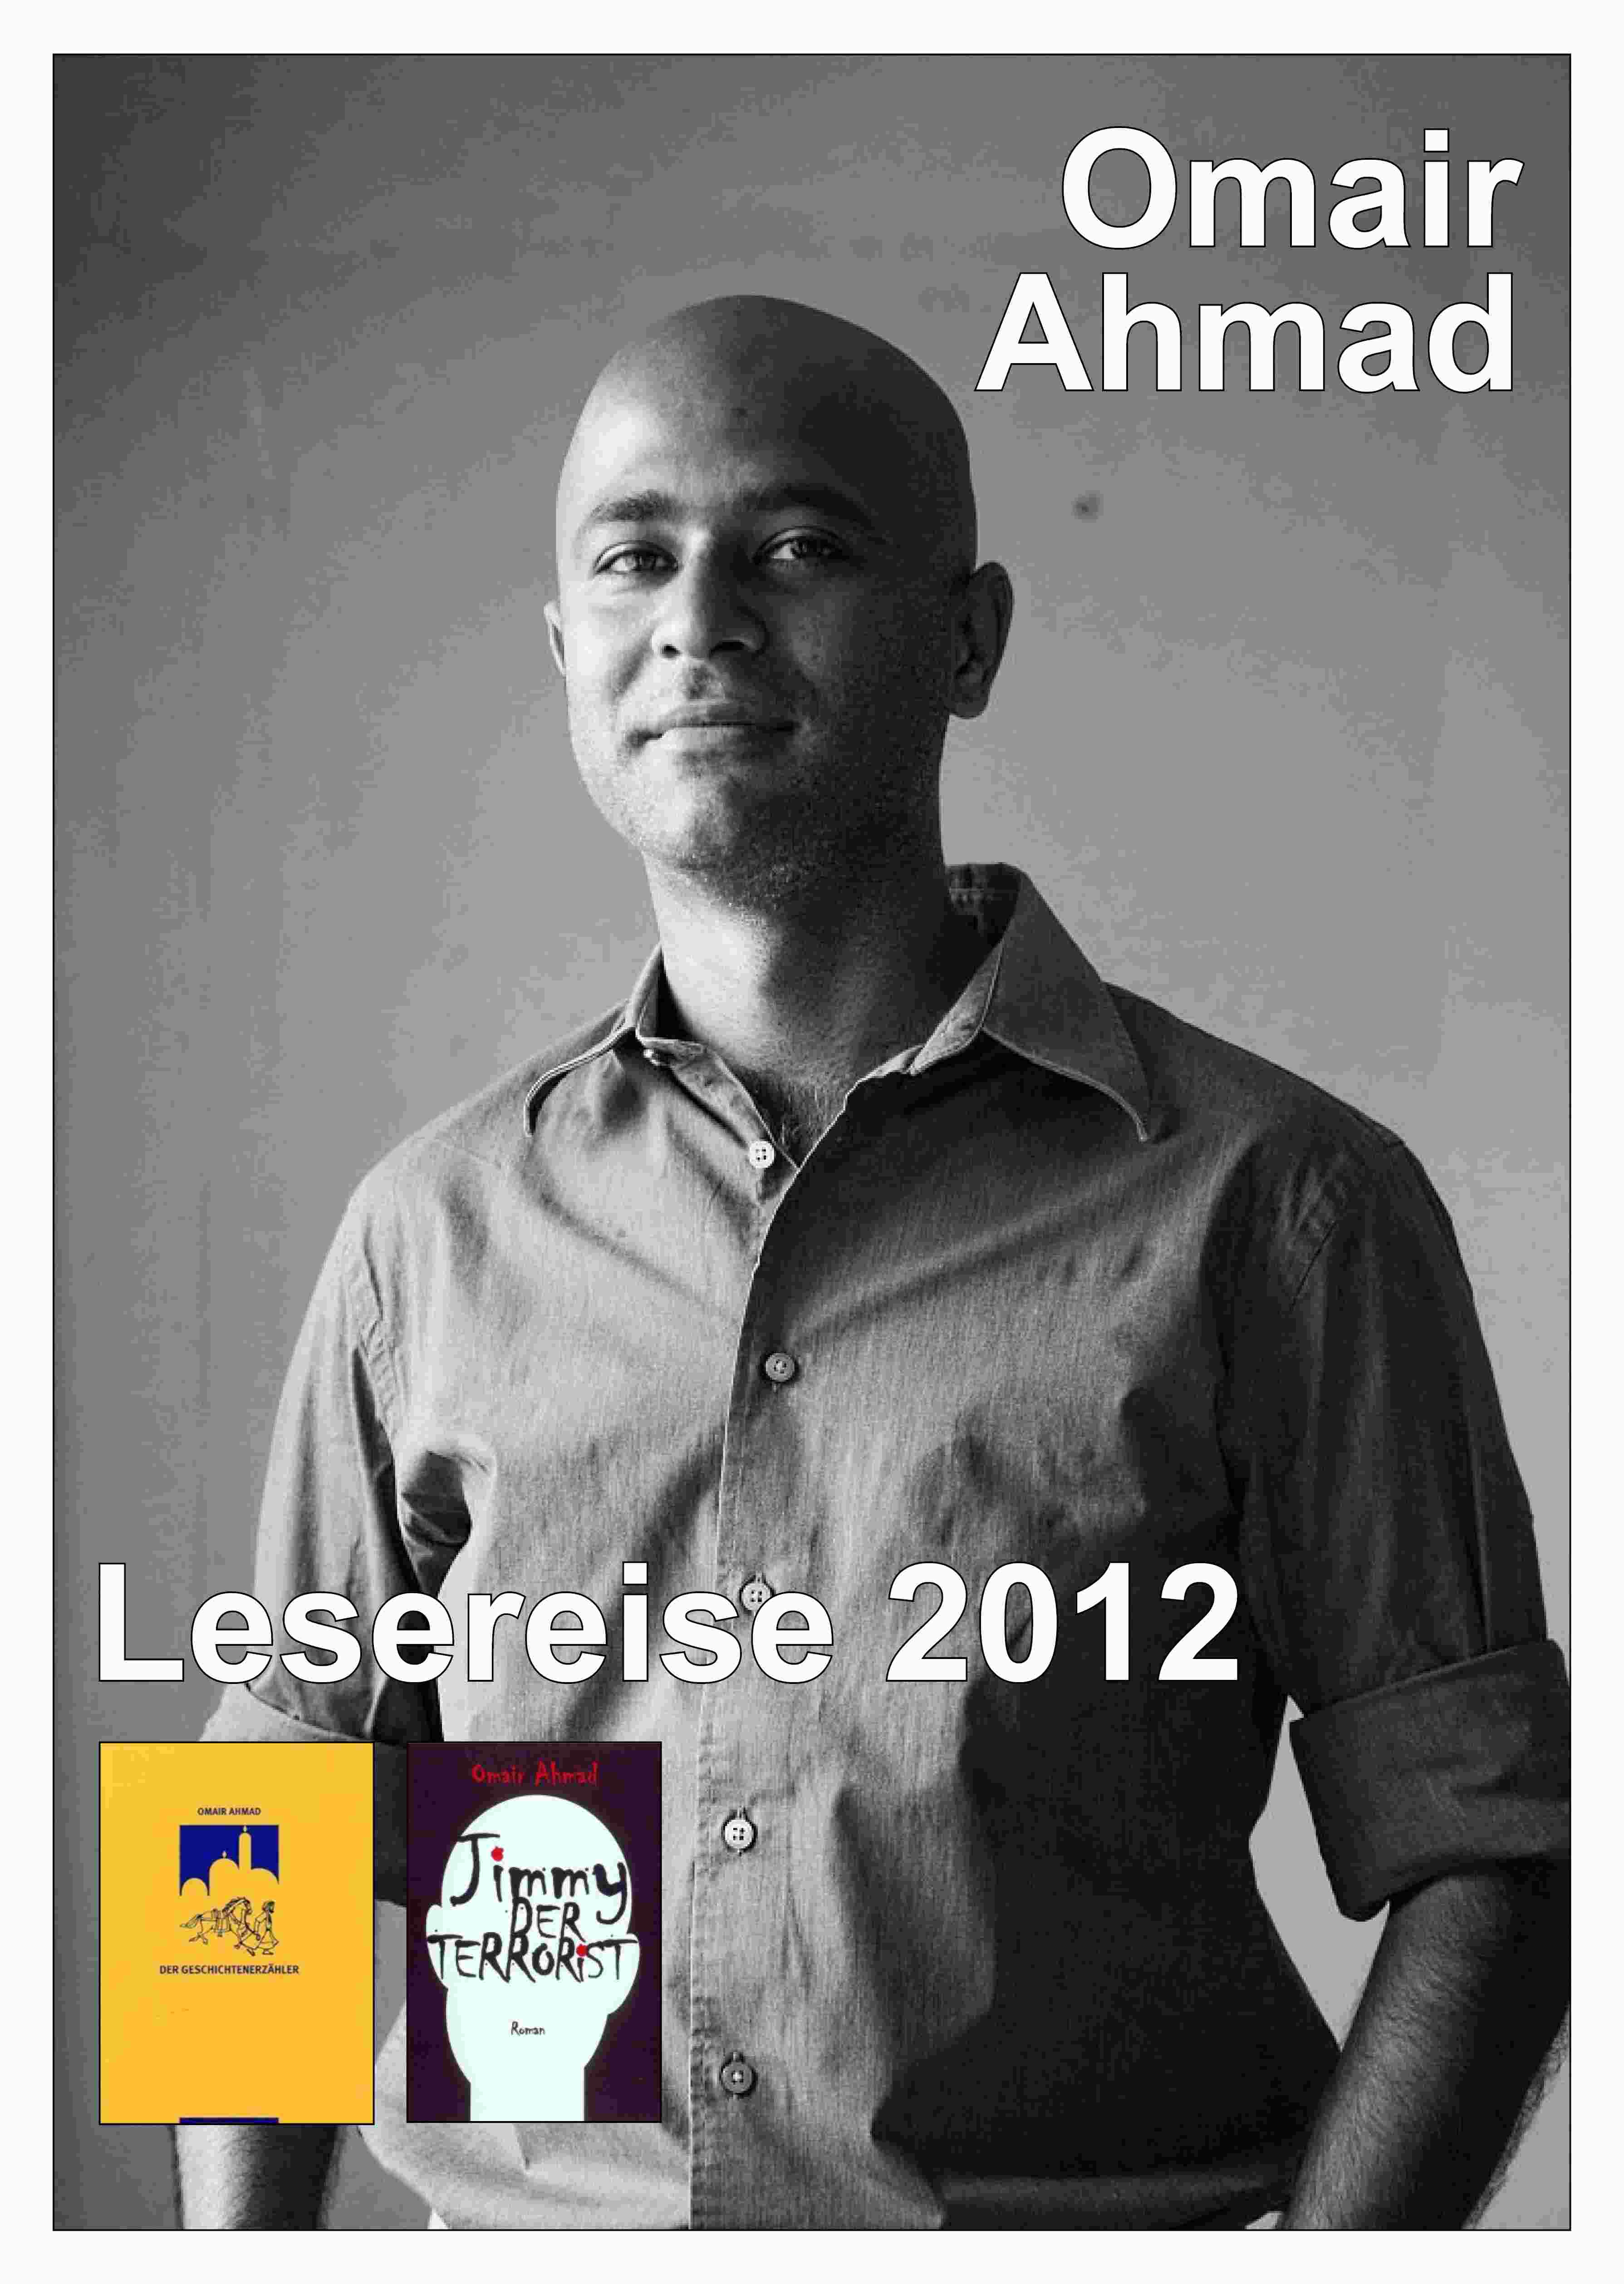 Lesereise Omair Ahmad 2012